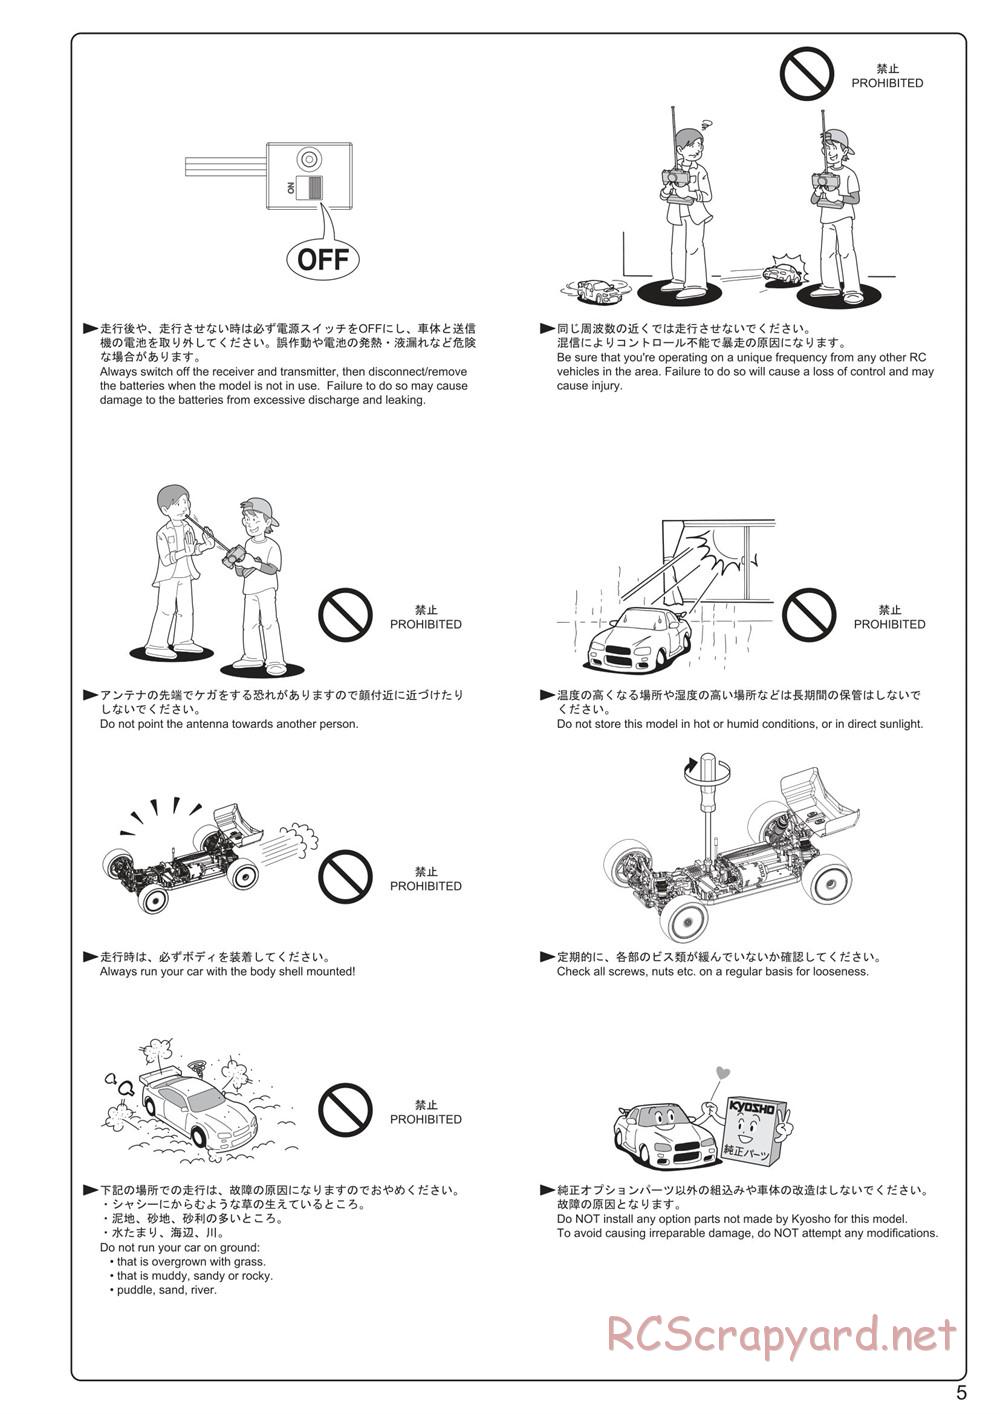 Kyosho - Lazer ZX7 - Manual - Page 5